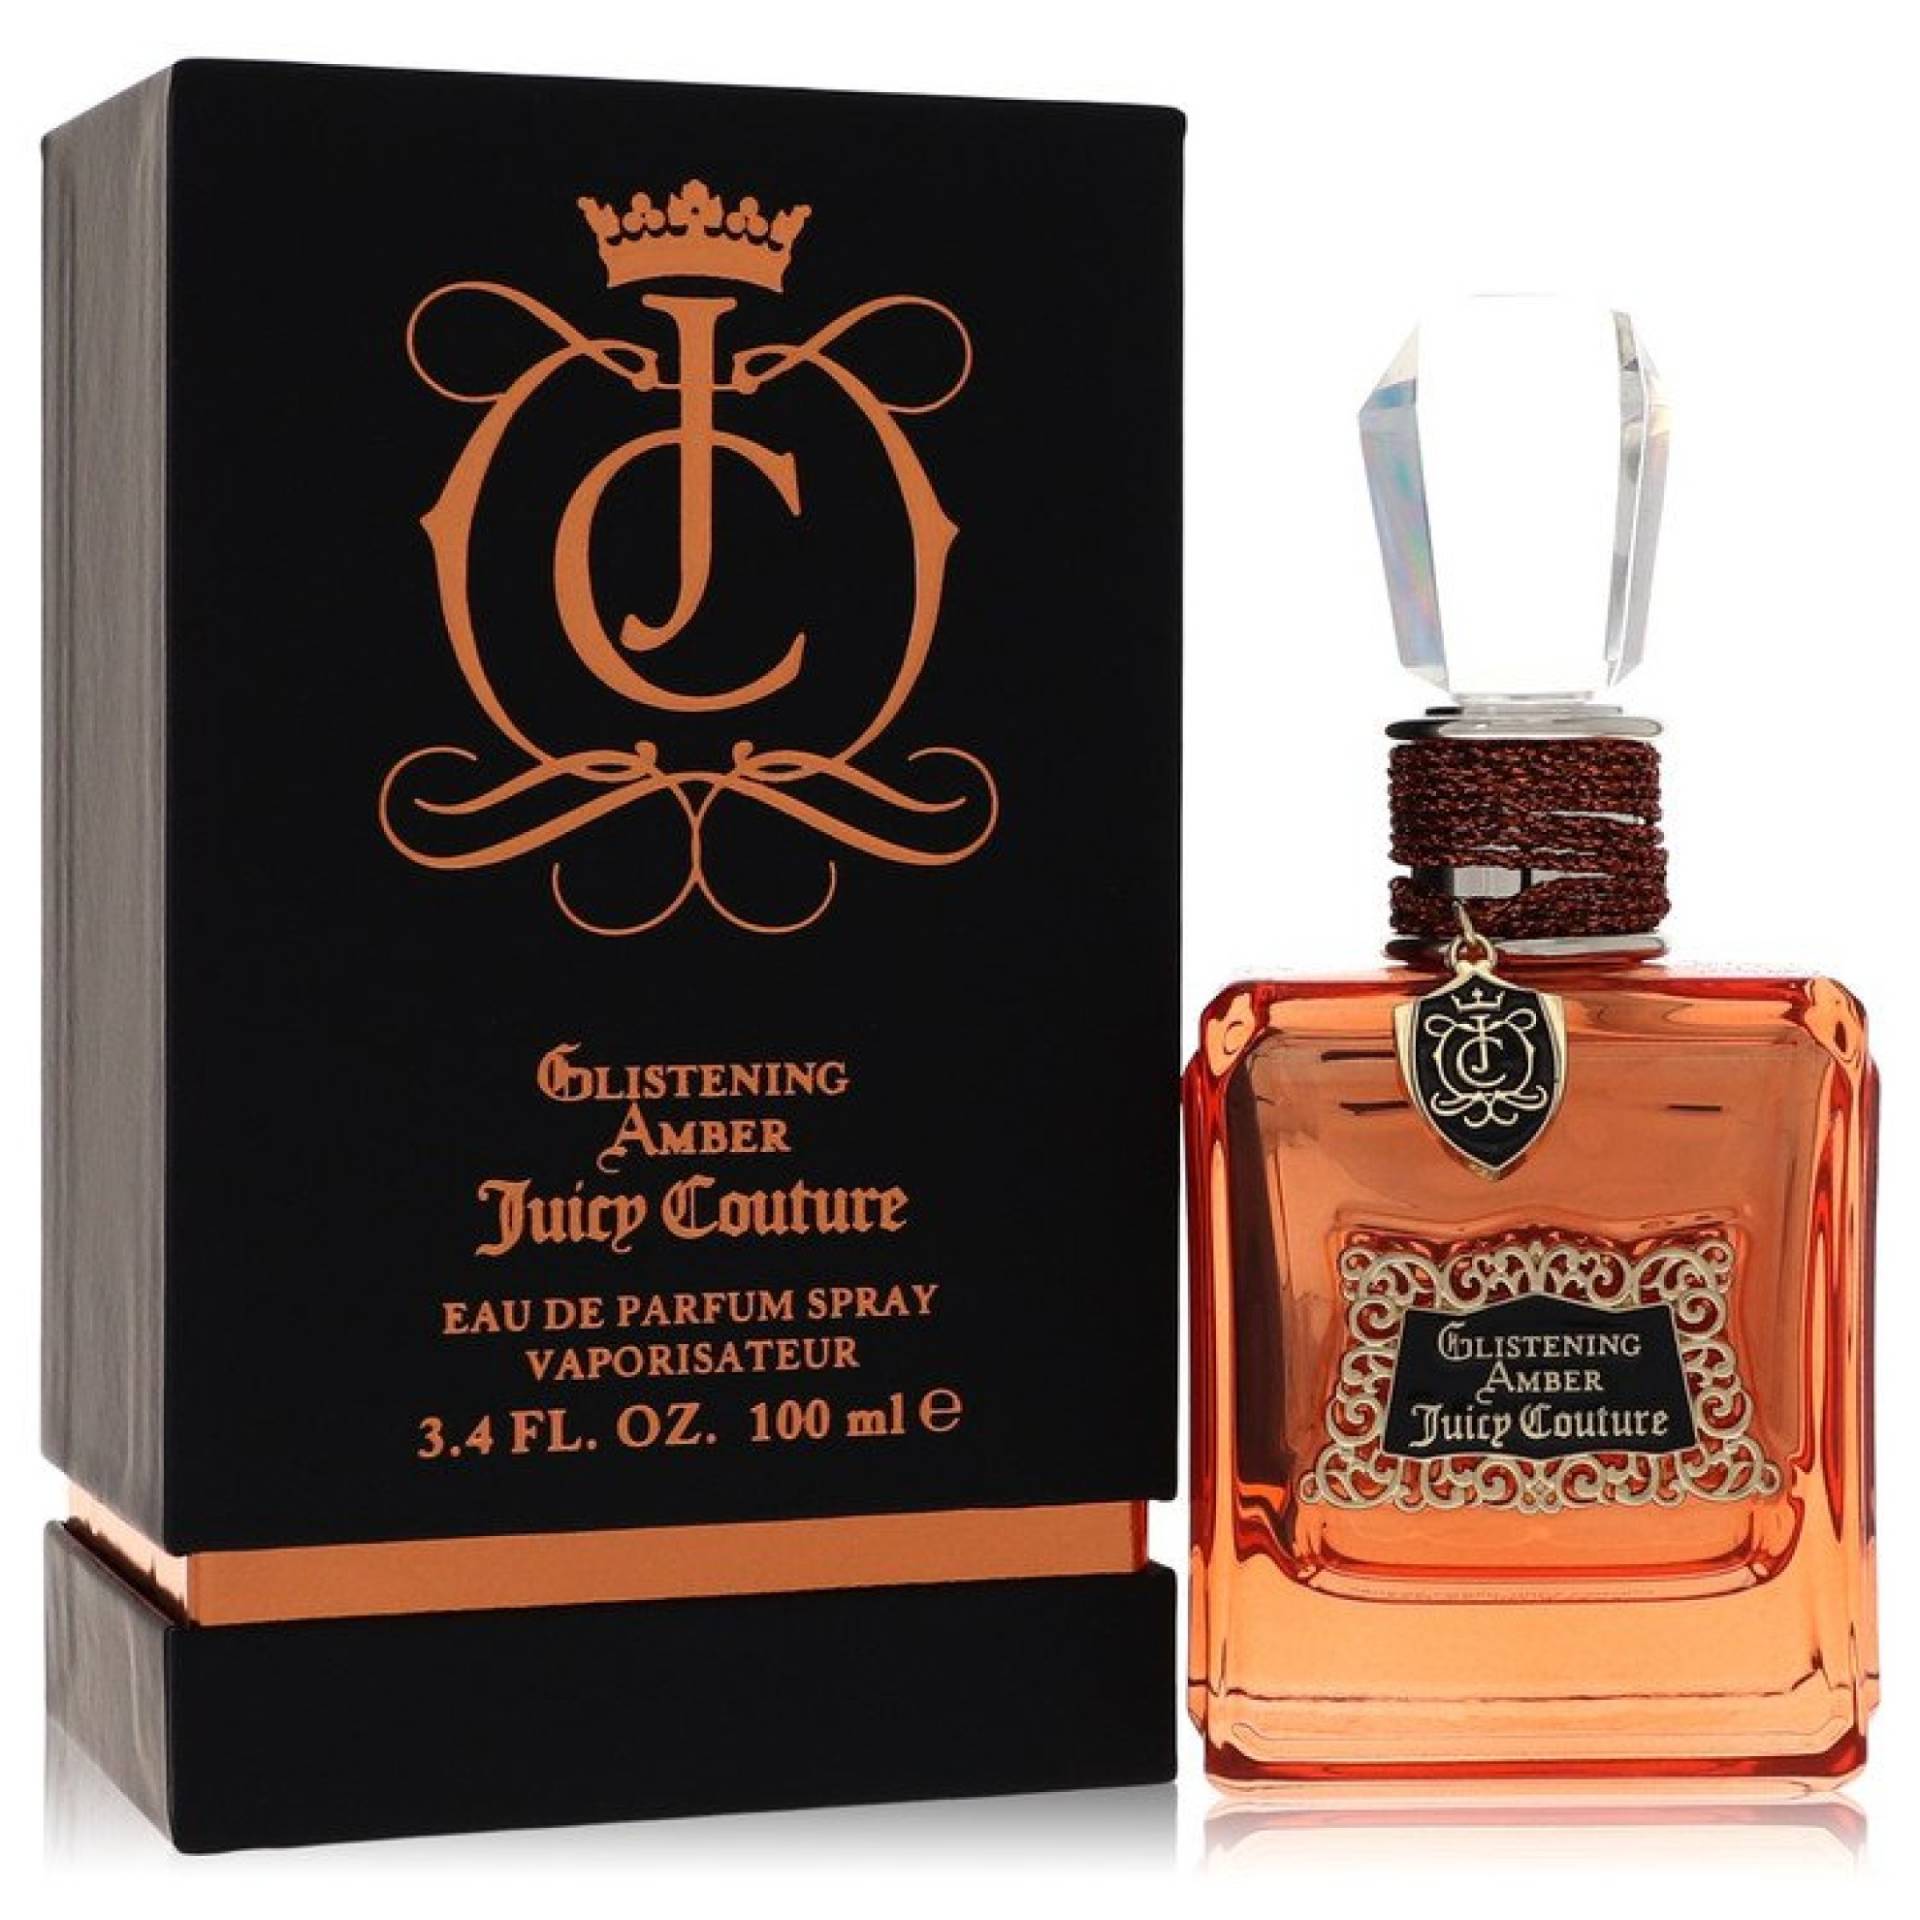 Juicy Couture Glistening Amber Eau De Parfum Spray 100 ml von Juicy Couture